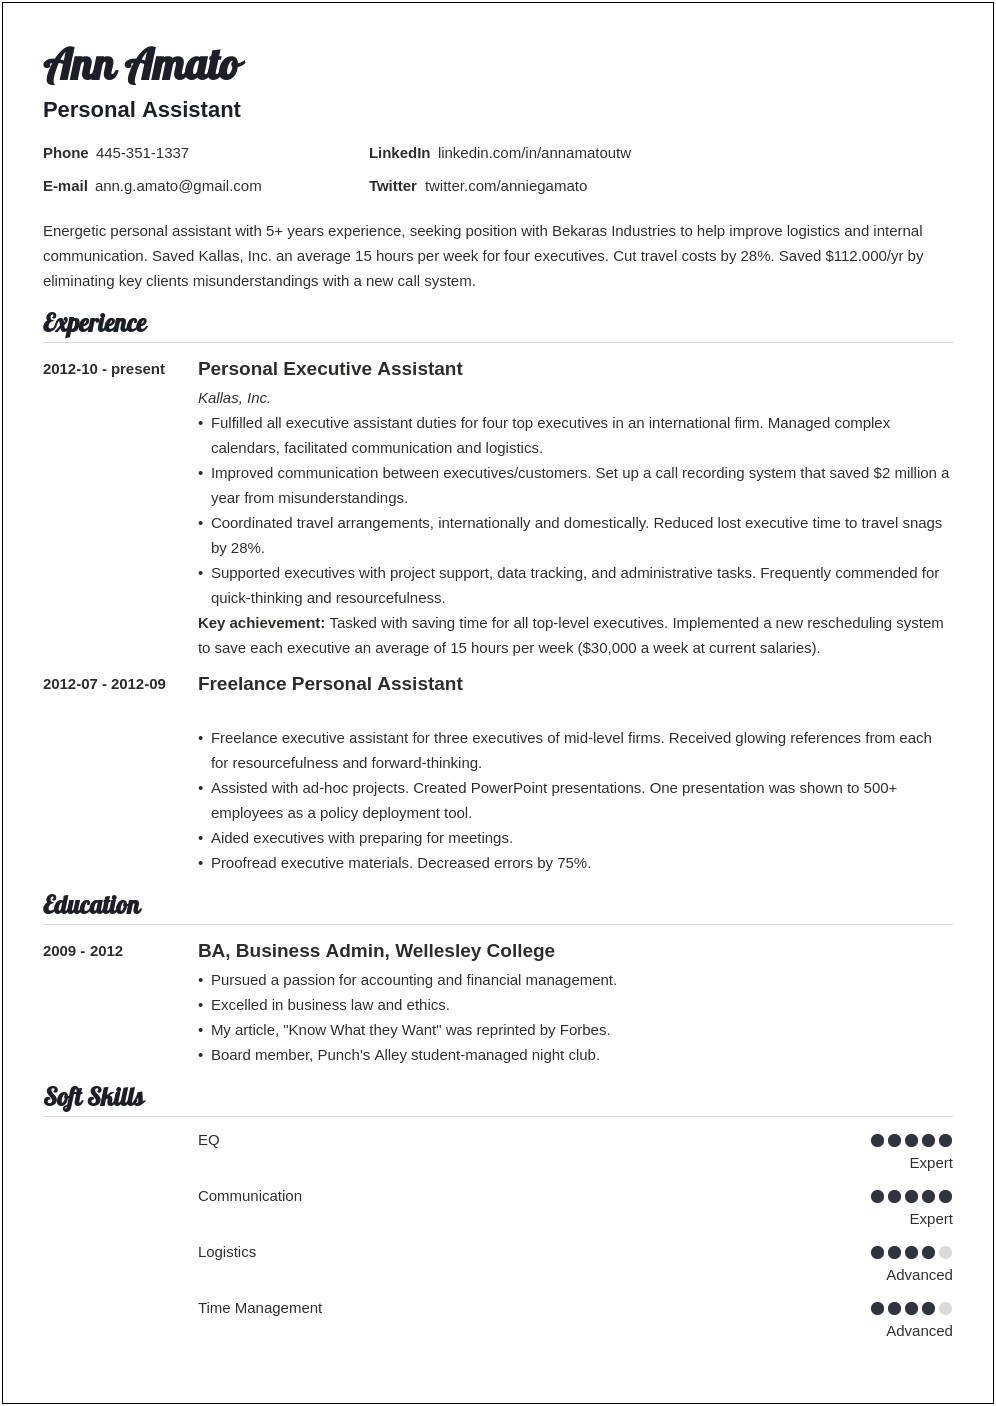 Job Application Online Reformat The Entire Resume